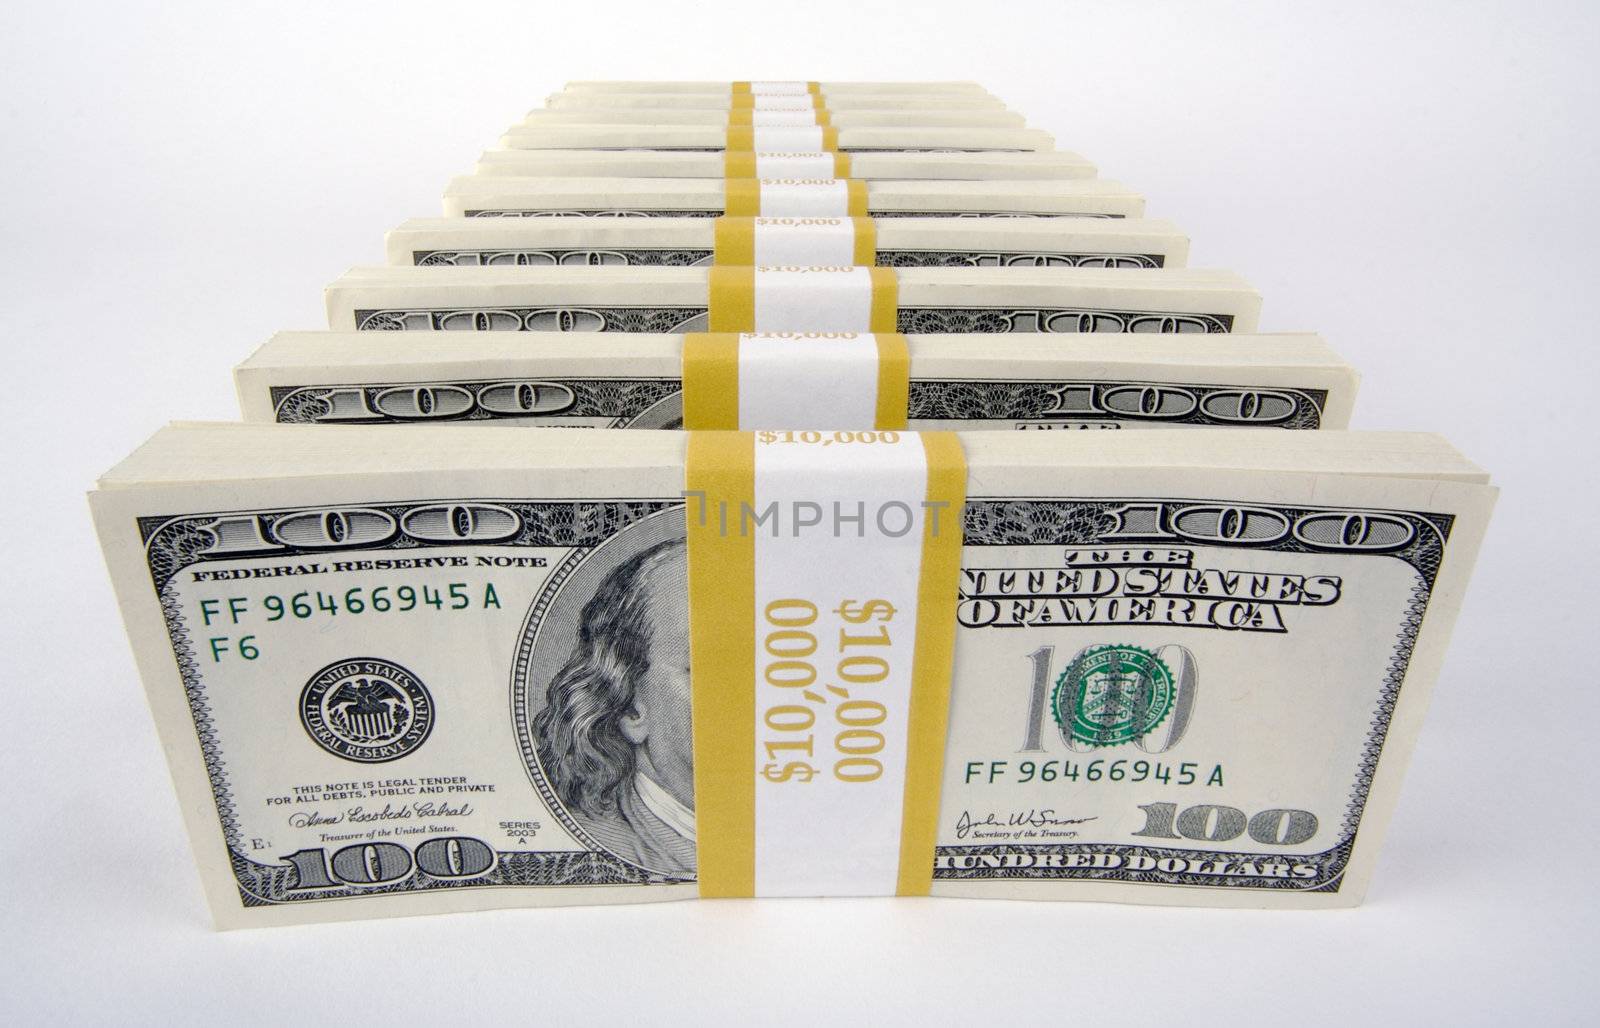 Stacks of Hundred Dollar Bills on a white background.